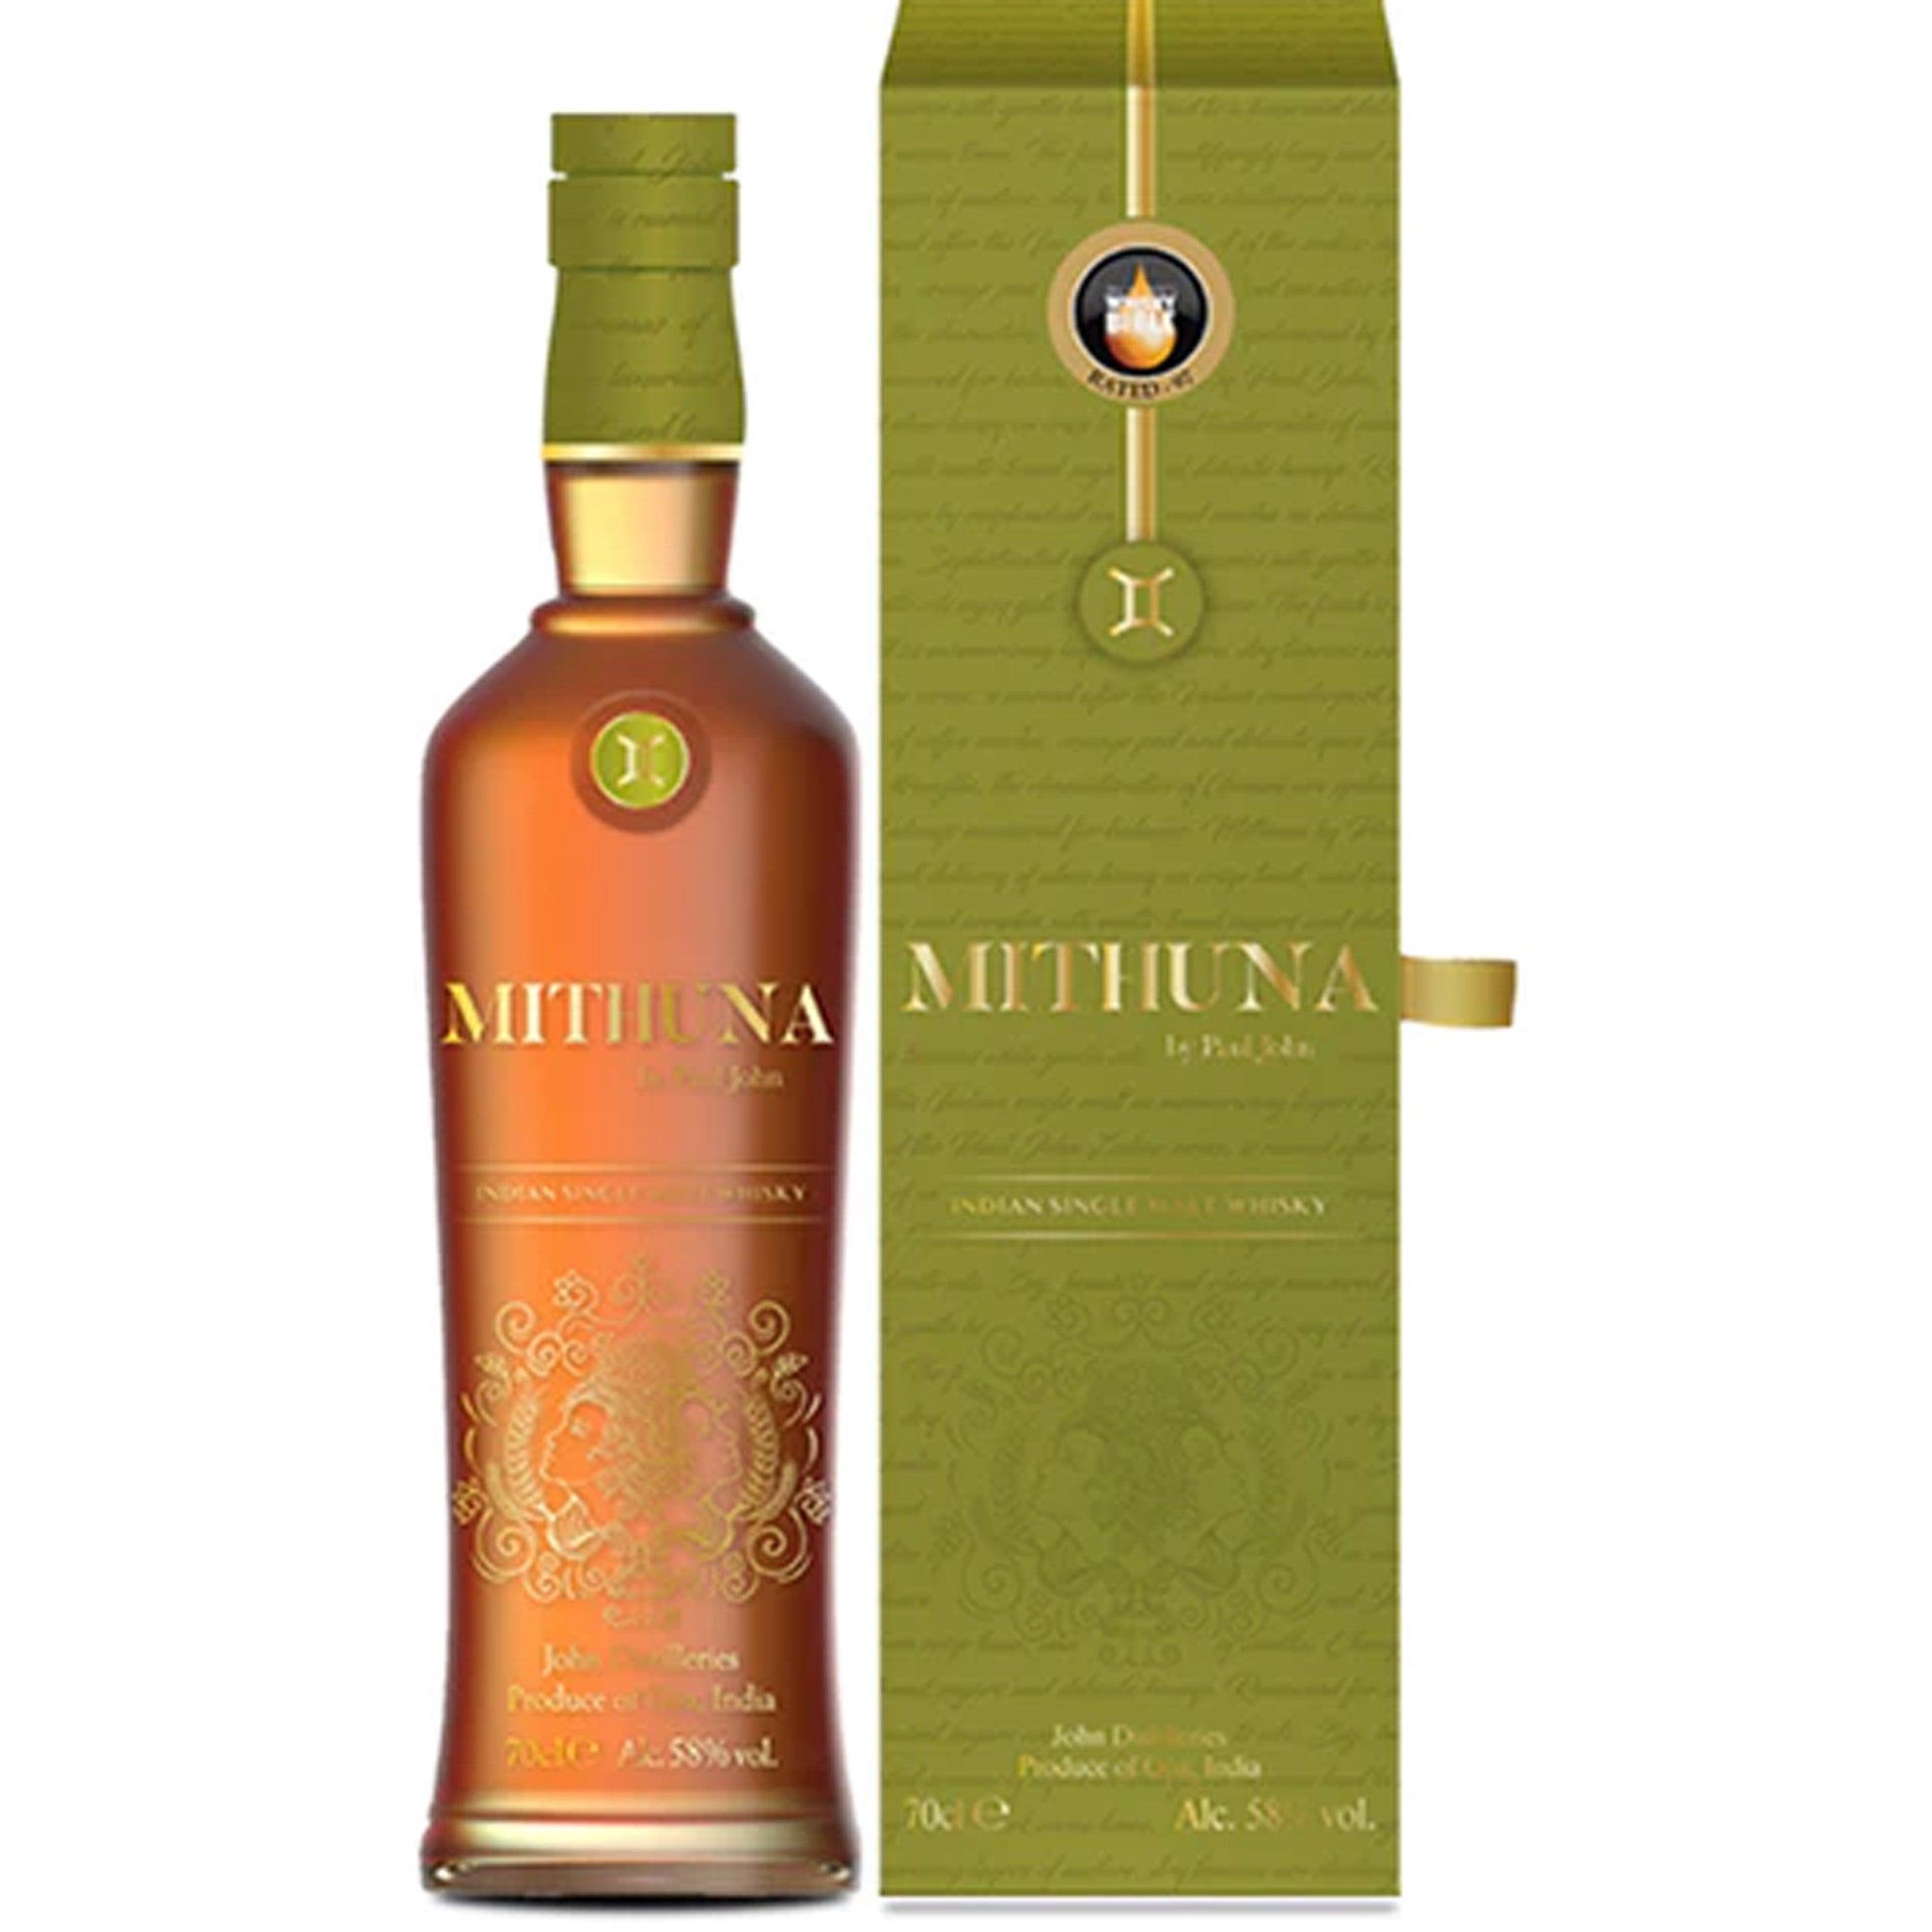 Paul John 'Mithuna' Indian Single Malt Whisky